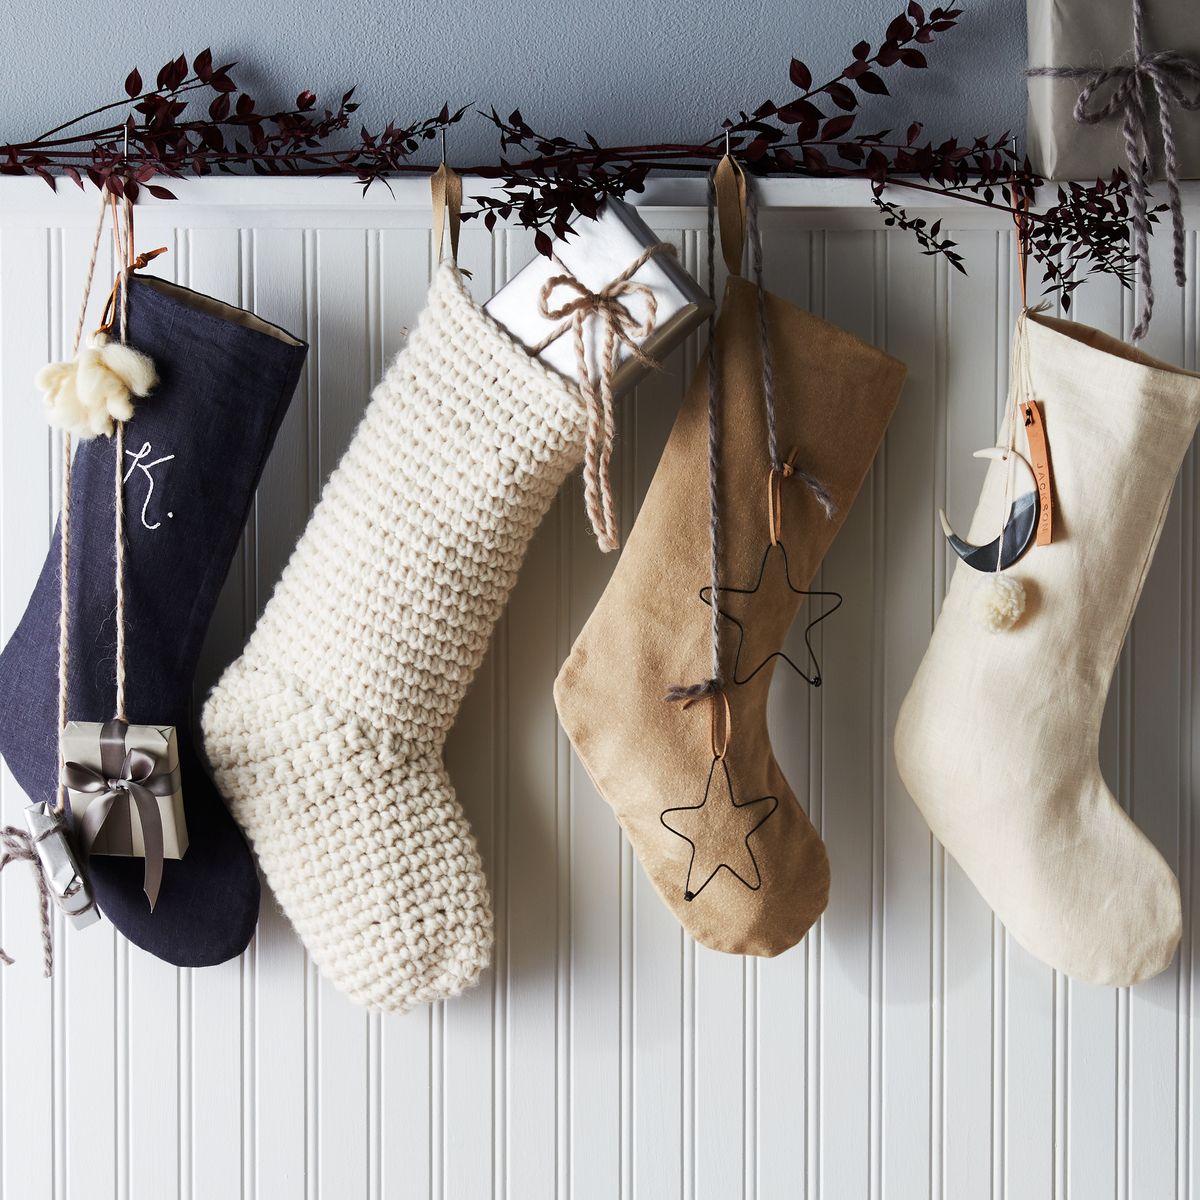 aantal het winkelcentrum oppervlakkig History of Christmas Stockings - Why Do We Hang Stockings at Christmas?